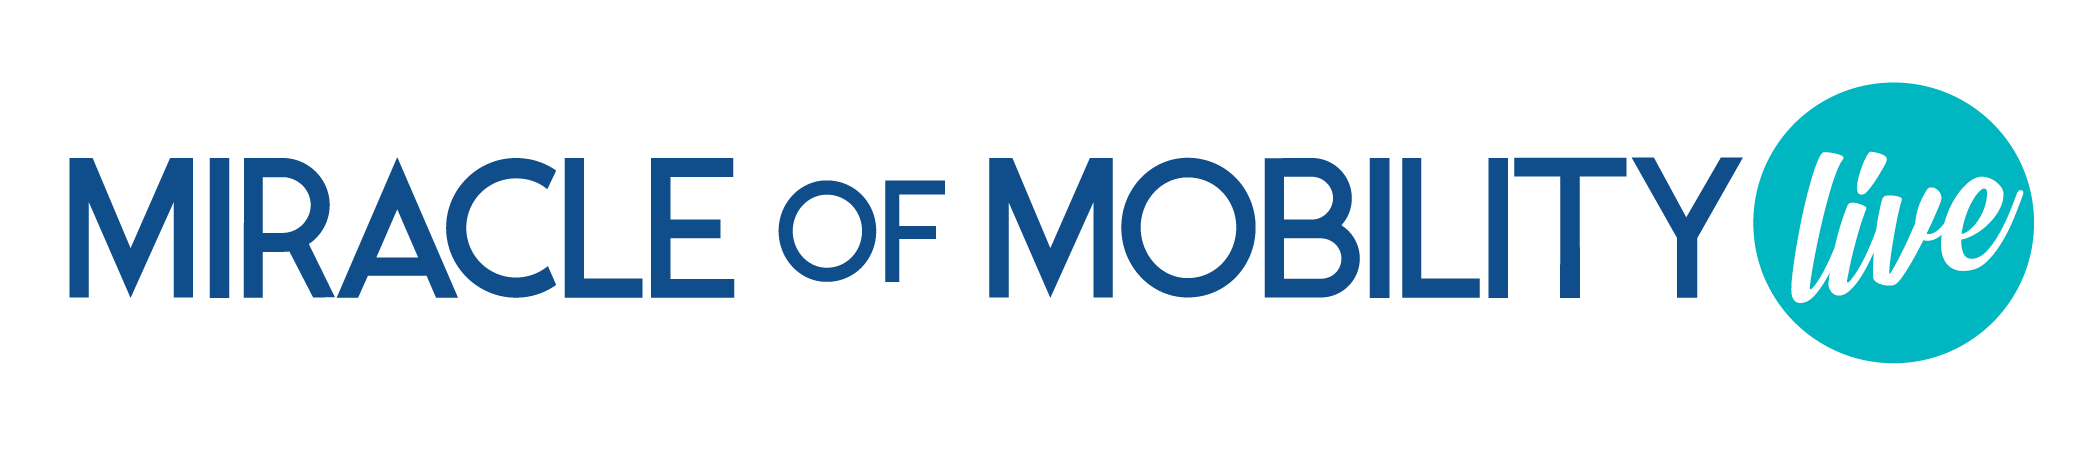 MOM LIVE Logo Text Only Horiz